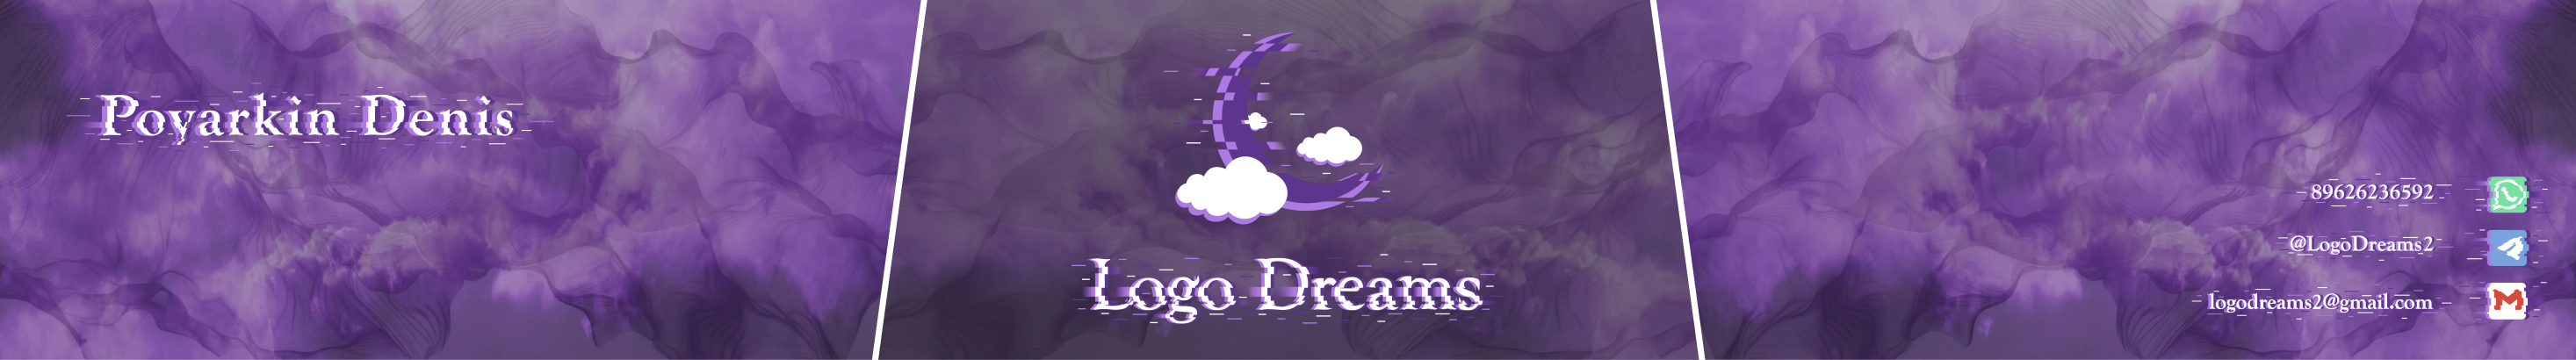 Logo Dreams's profile banner